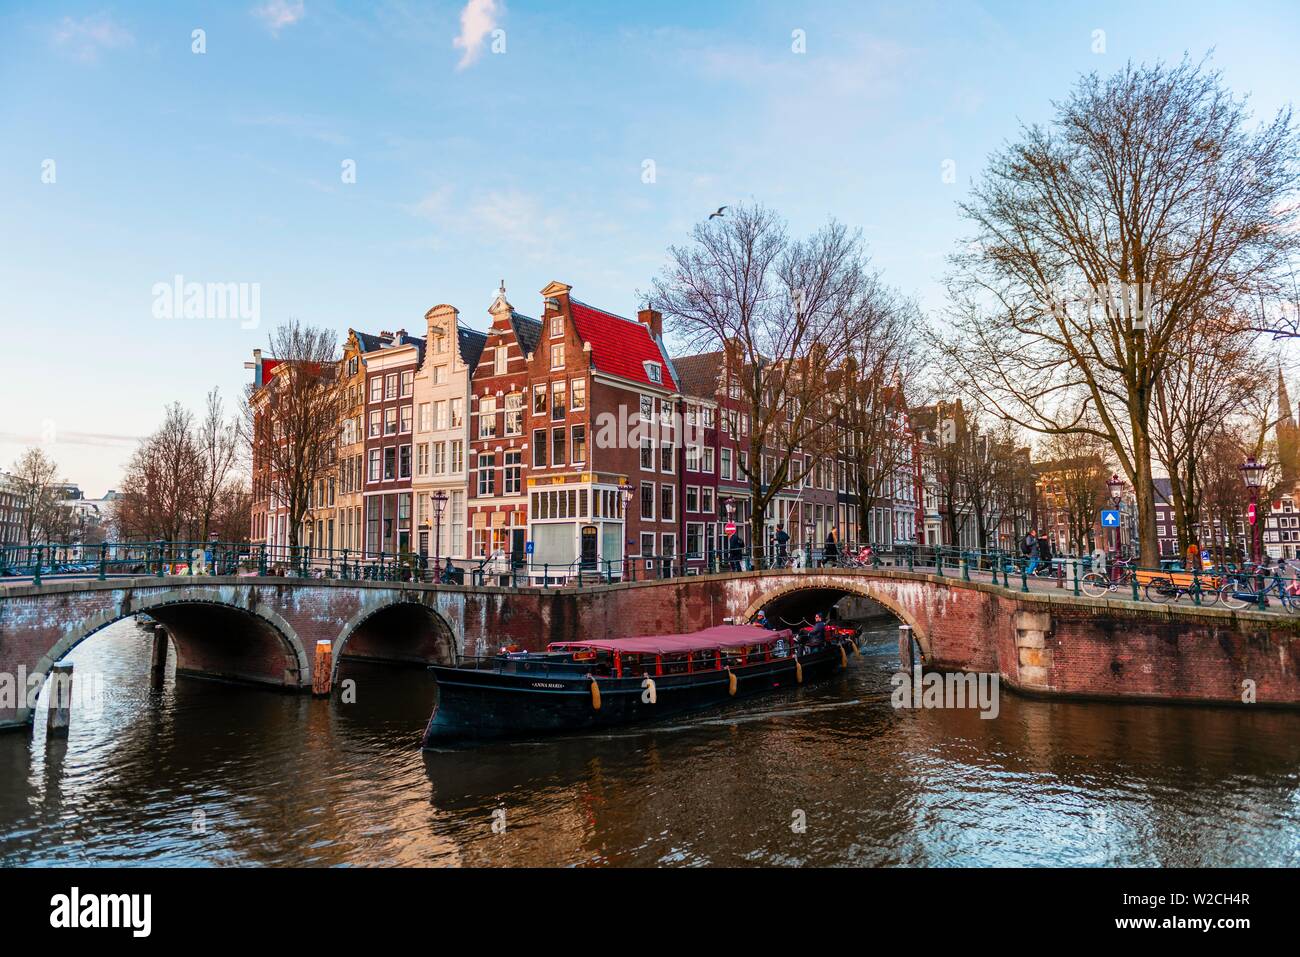 Atmosfera serale, canal con bridge, Keizersgracht e Leidsegracht, canal con case storiche, Amsterdam, Olanda Settentrionale, Paesi Bassi Foto Stock